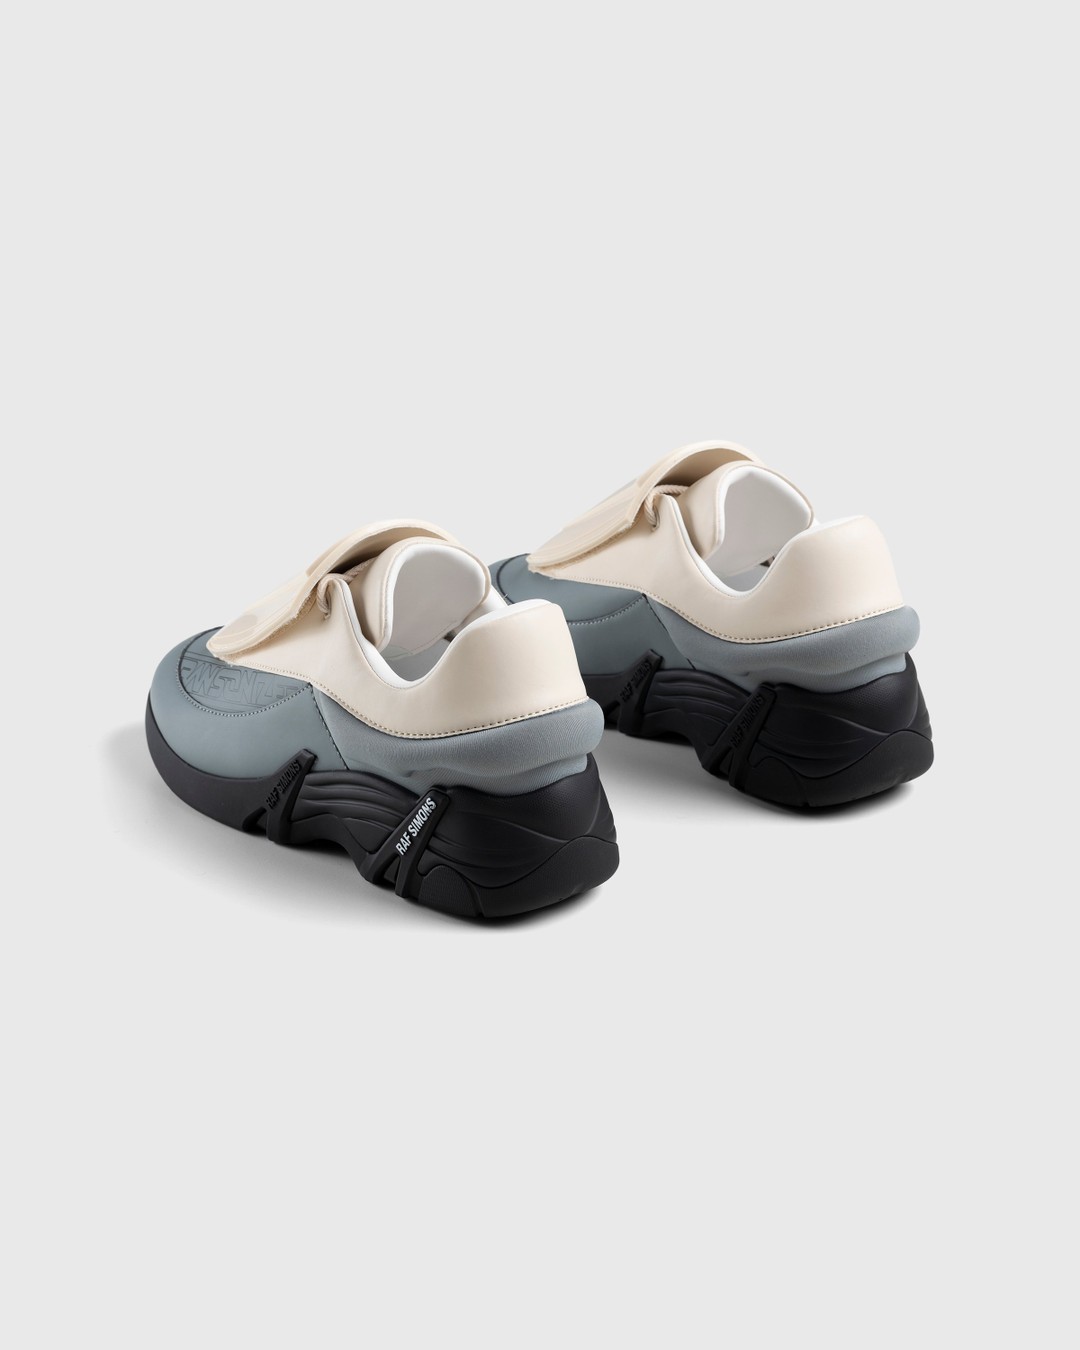 Raf Simons – Antei Cream/Grey - Low Top Sneakers - Grey - Image 4